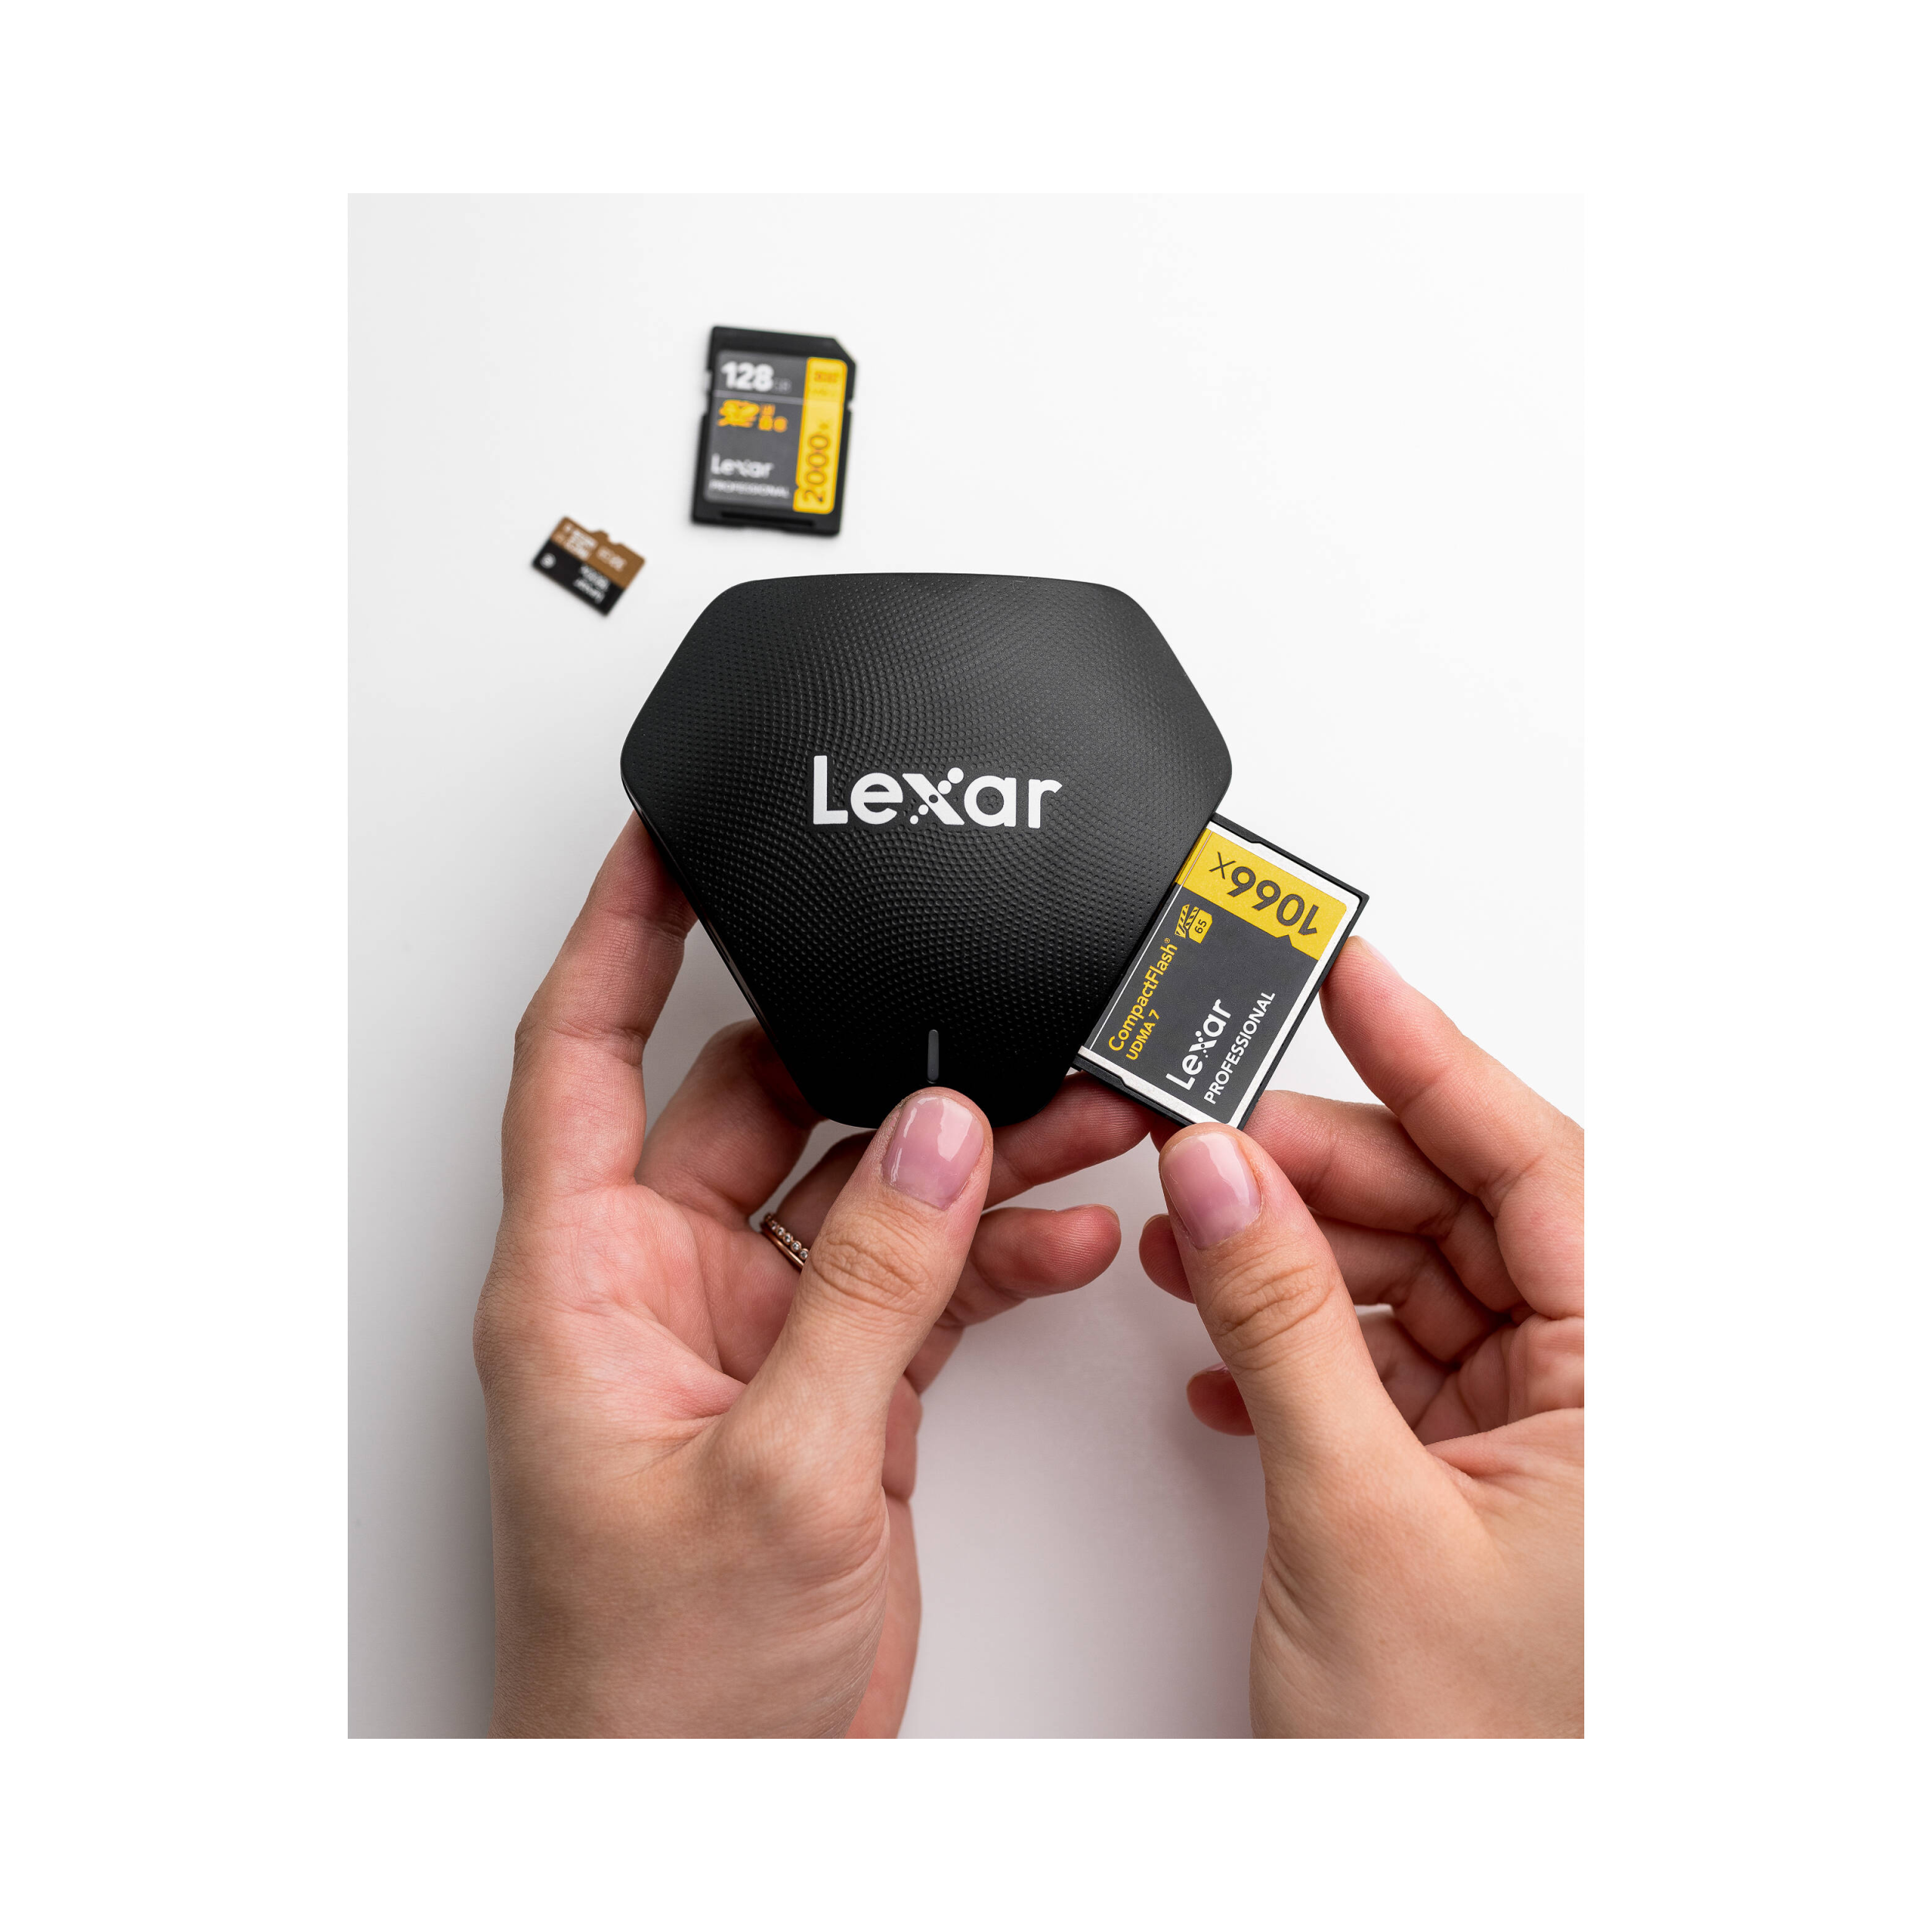 LEXAR - lecteur 2en1 usb 3.1 SD et Micro-SD